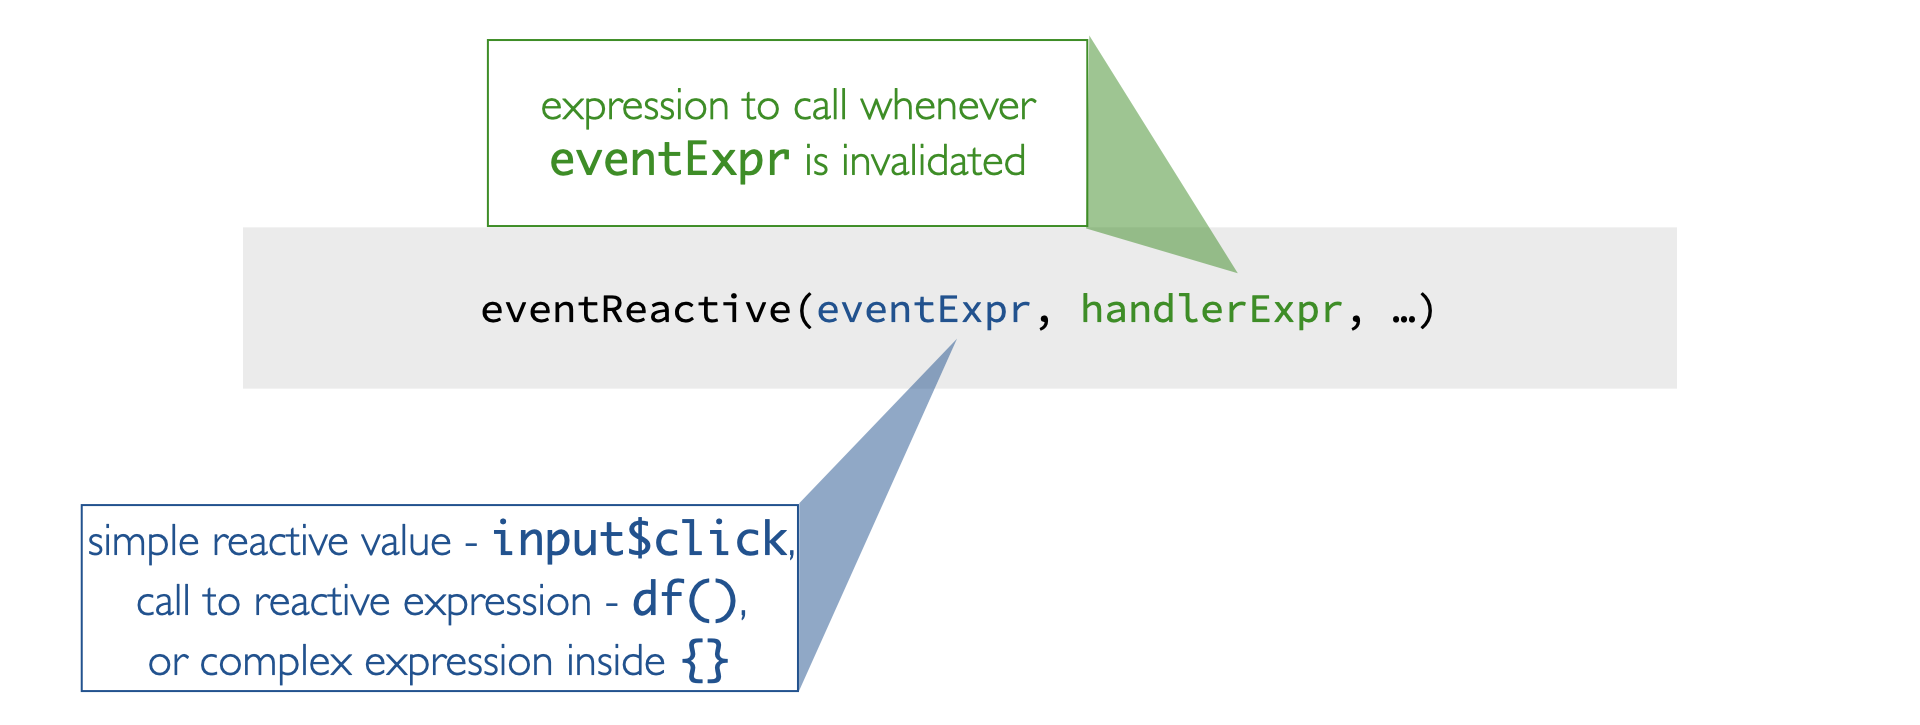 Code line 'eventReactive(eventExpr, handlerExpr, ...)'. 'eventExpr' is described as 'simple reactive value - input$click, call to reactive expression - df(), or complex expression inside {}'. 'handlerExpr' is described as 'expression to call whenever eventExpr is invalidated'.